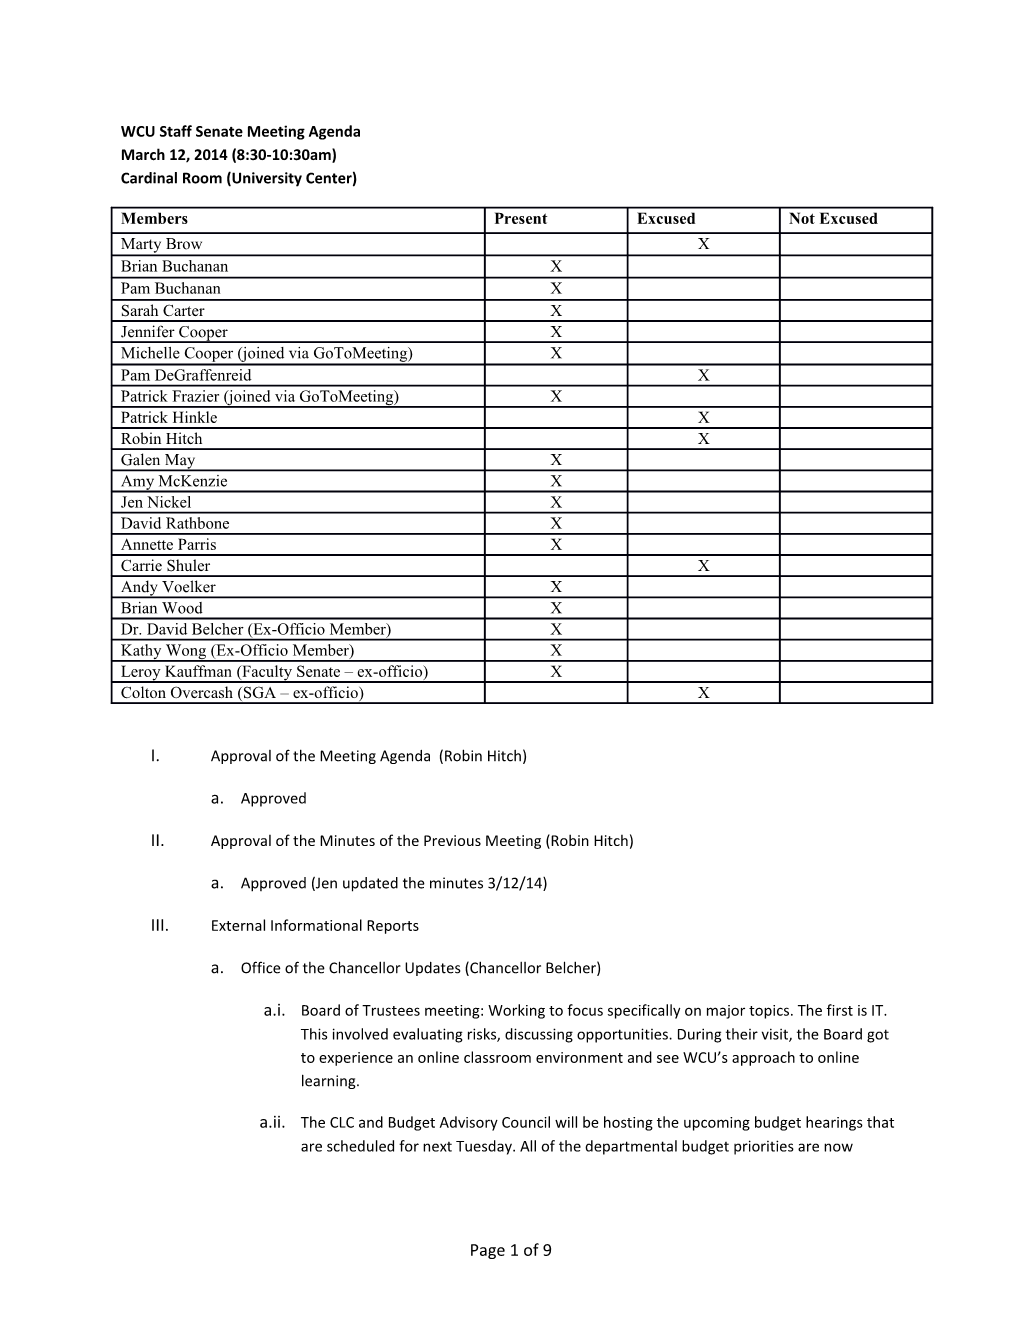 Staff Senate Minutes - March 2014